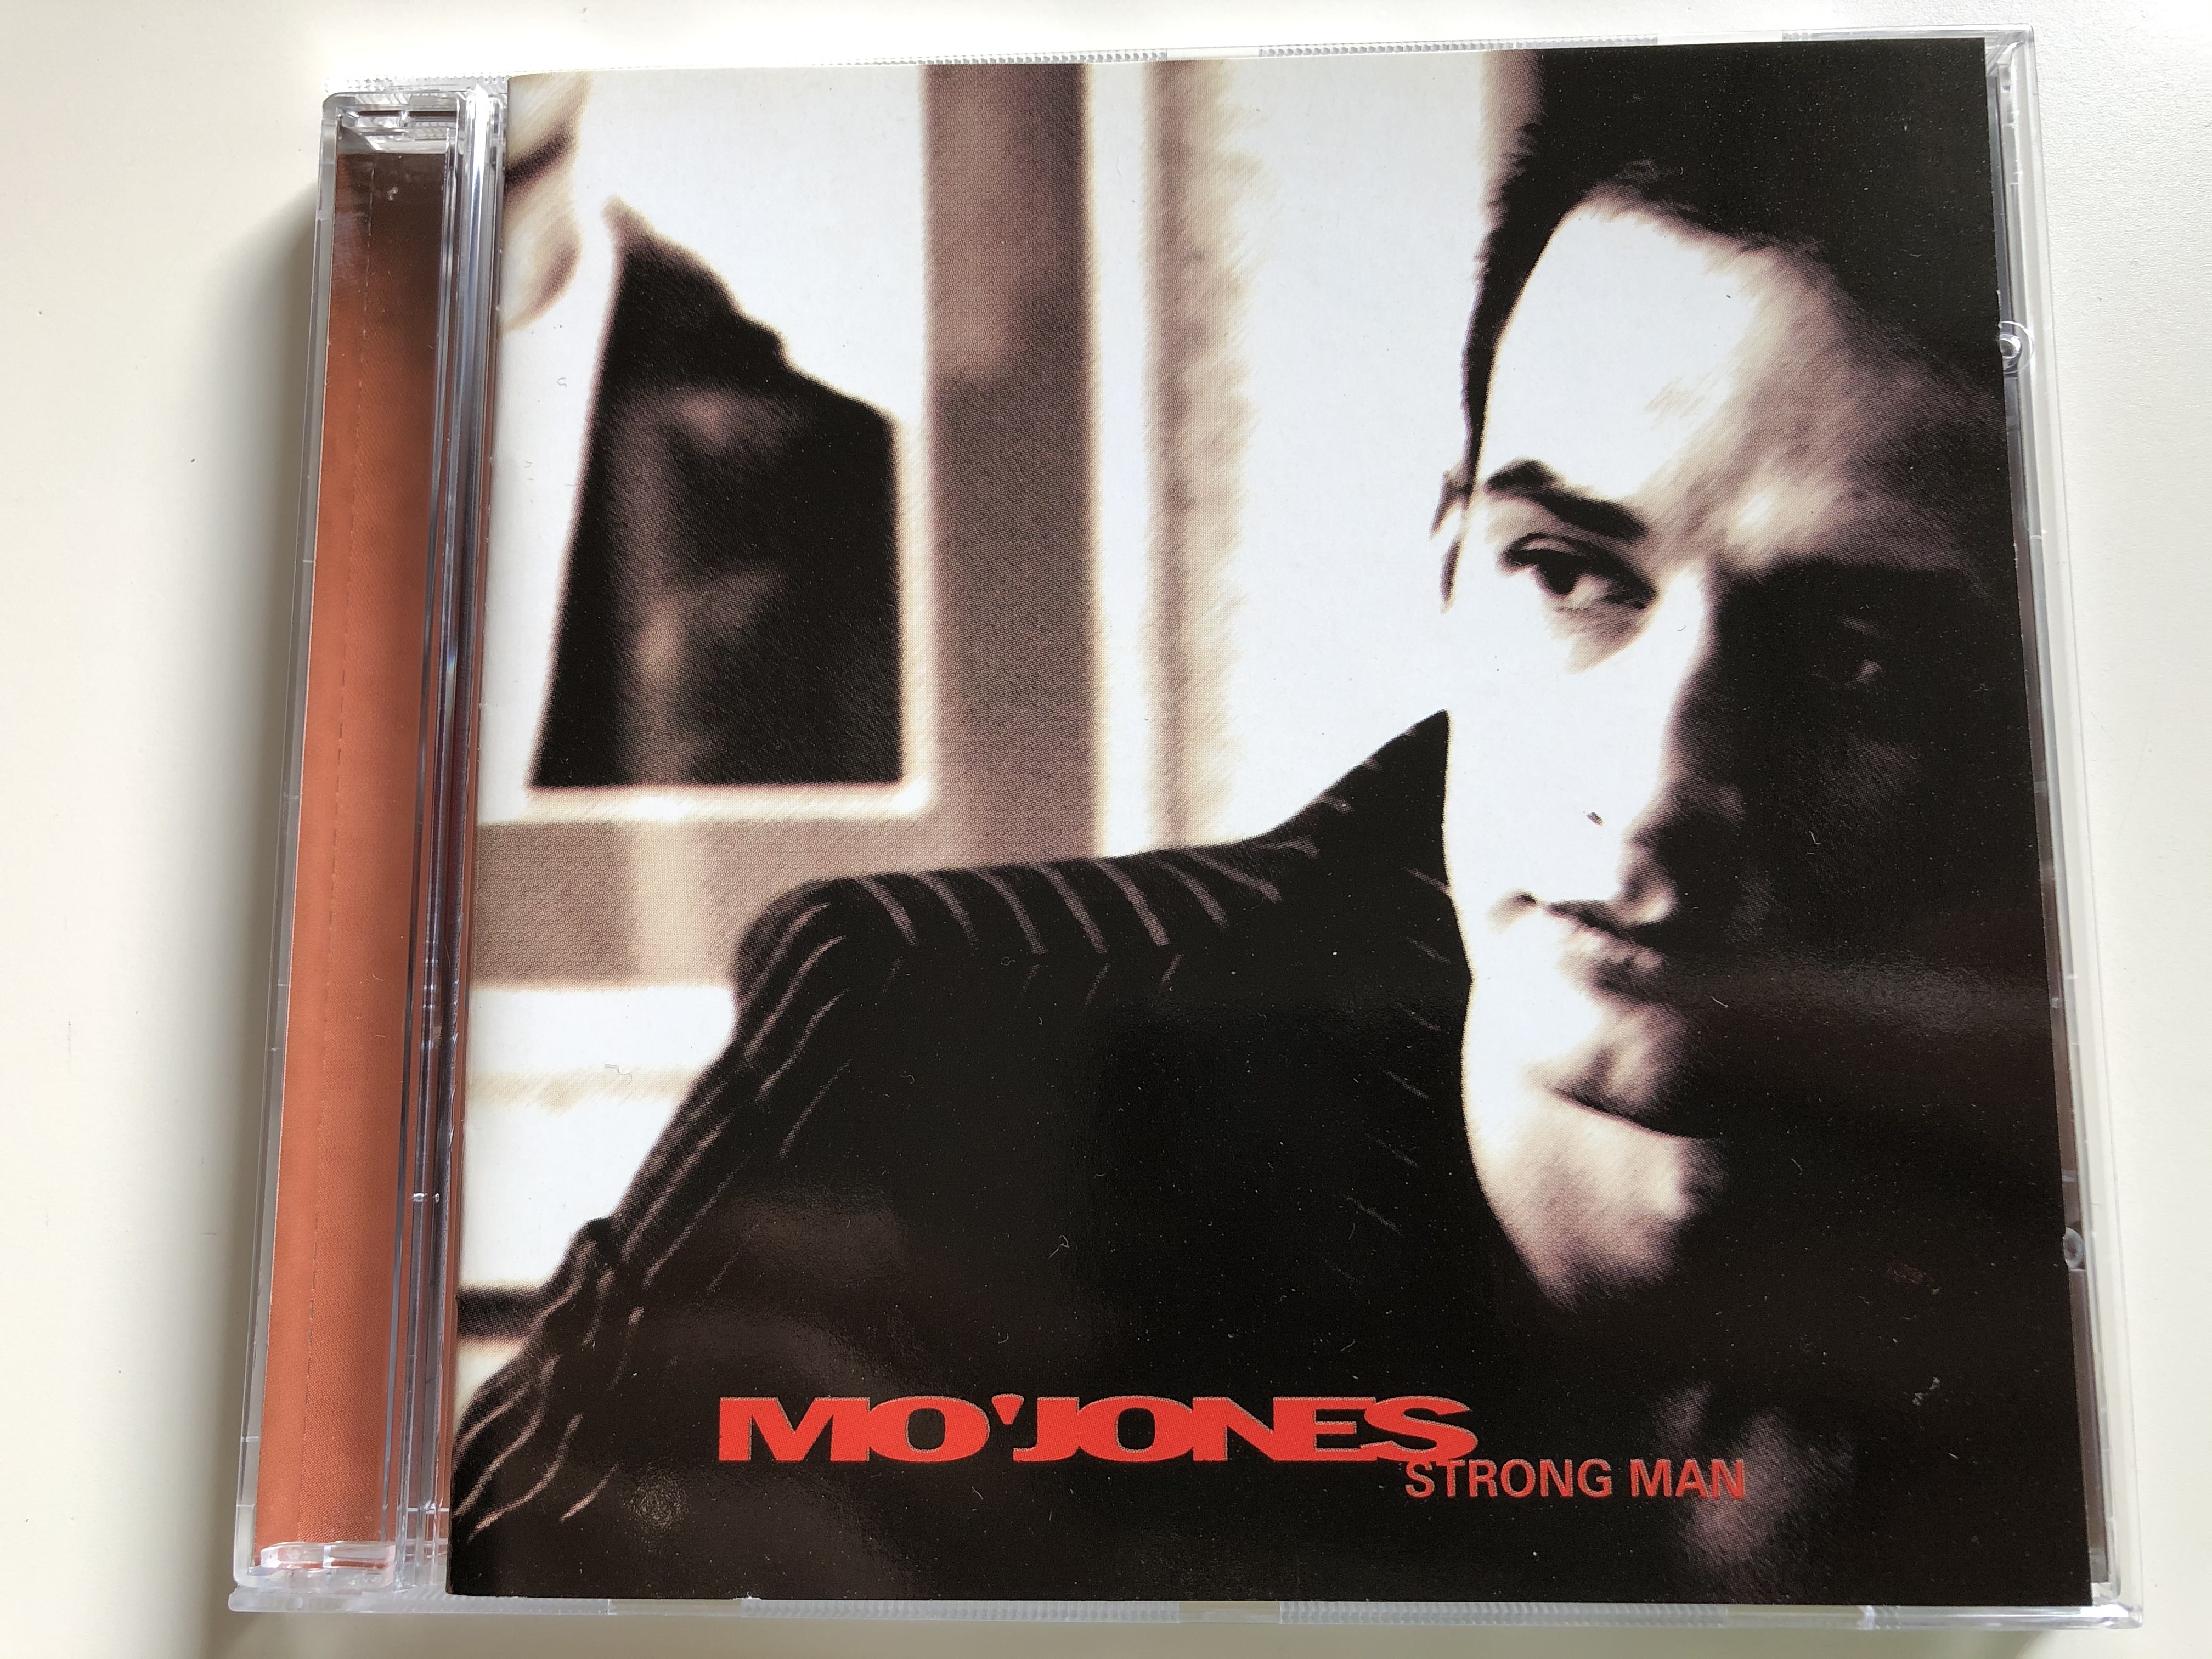 mo-jones-strong-man-mo-jones-records-audio-cd-2002-8717228220012-1-.jpg